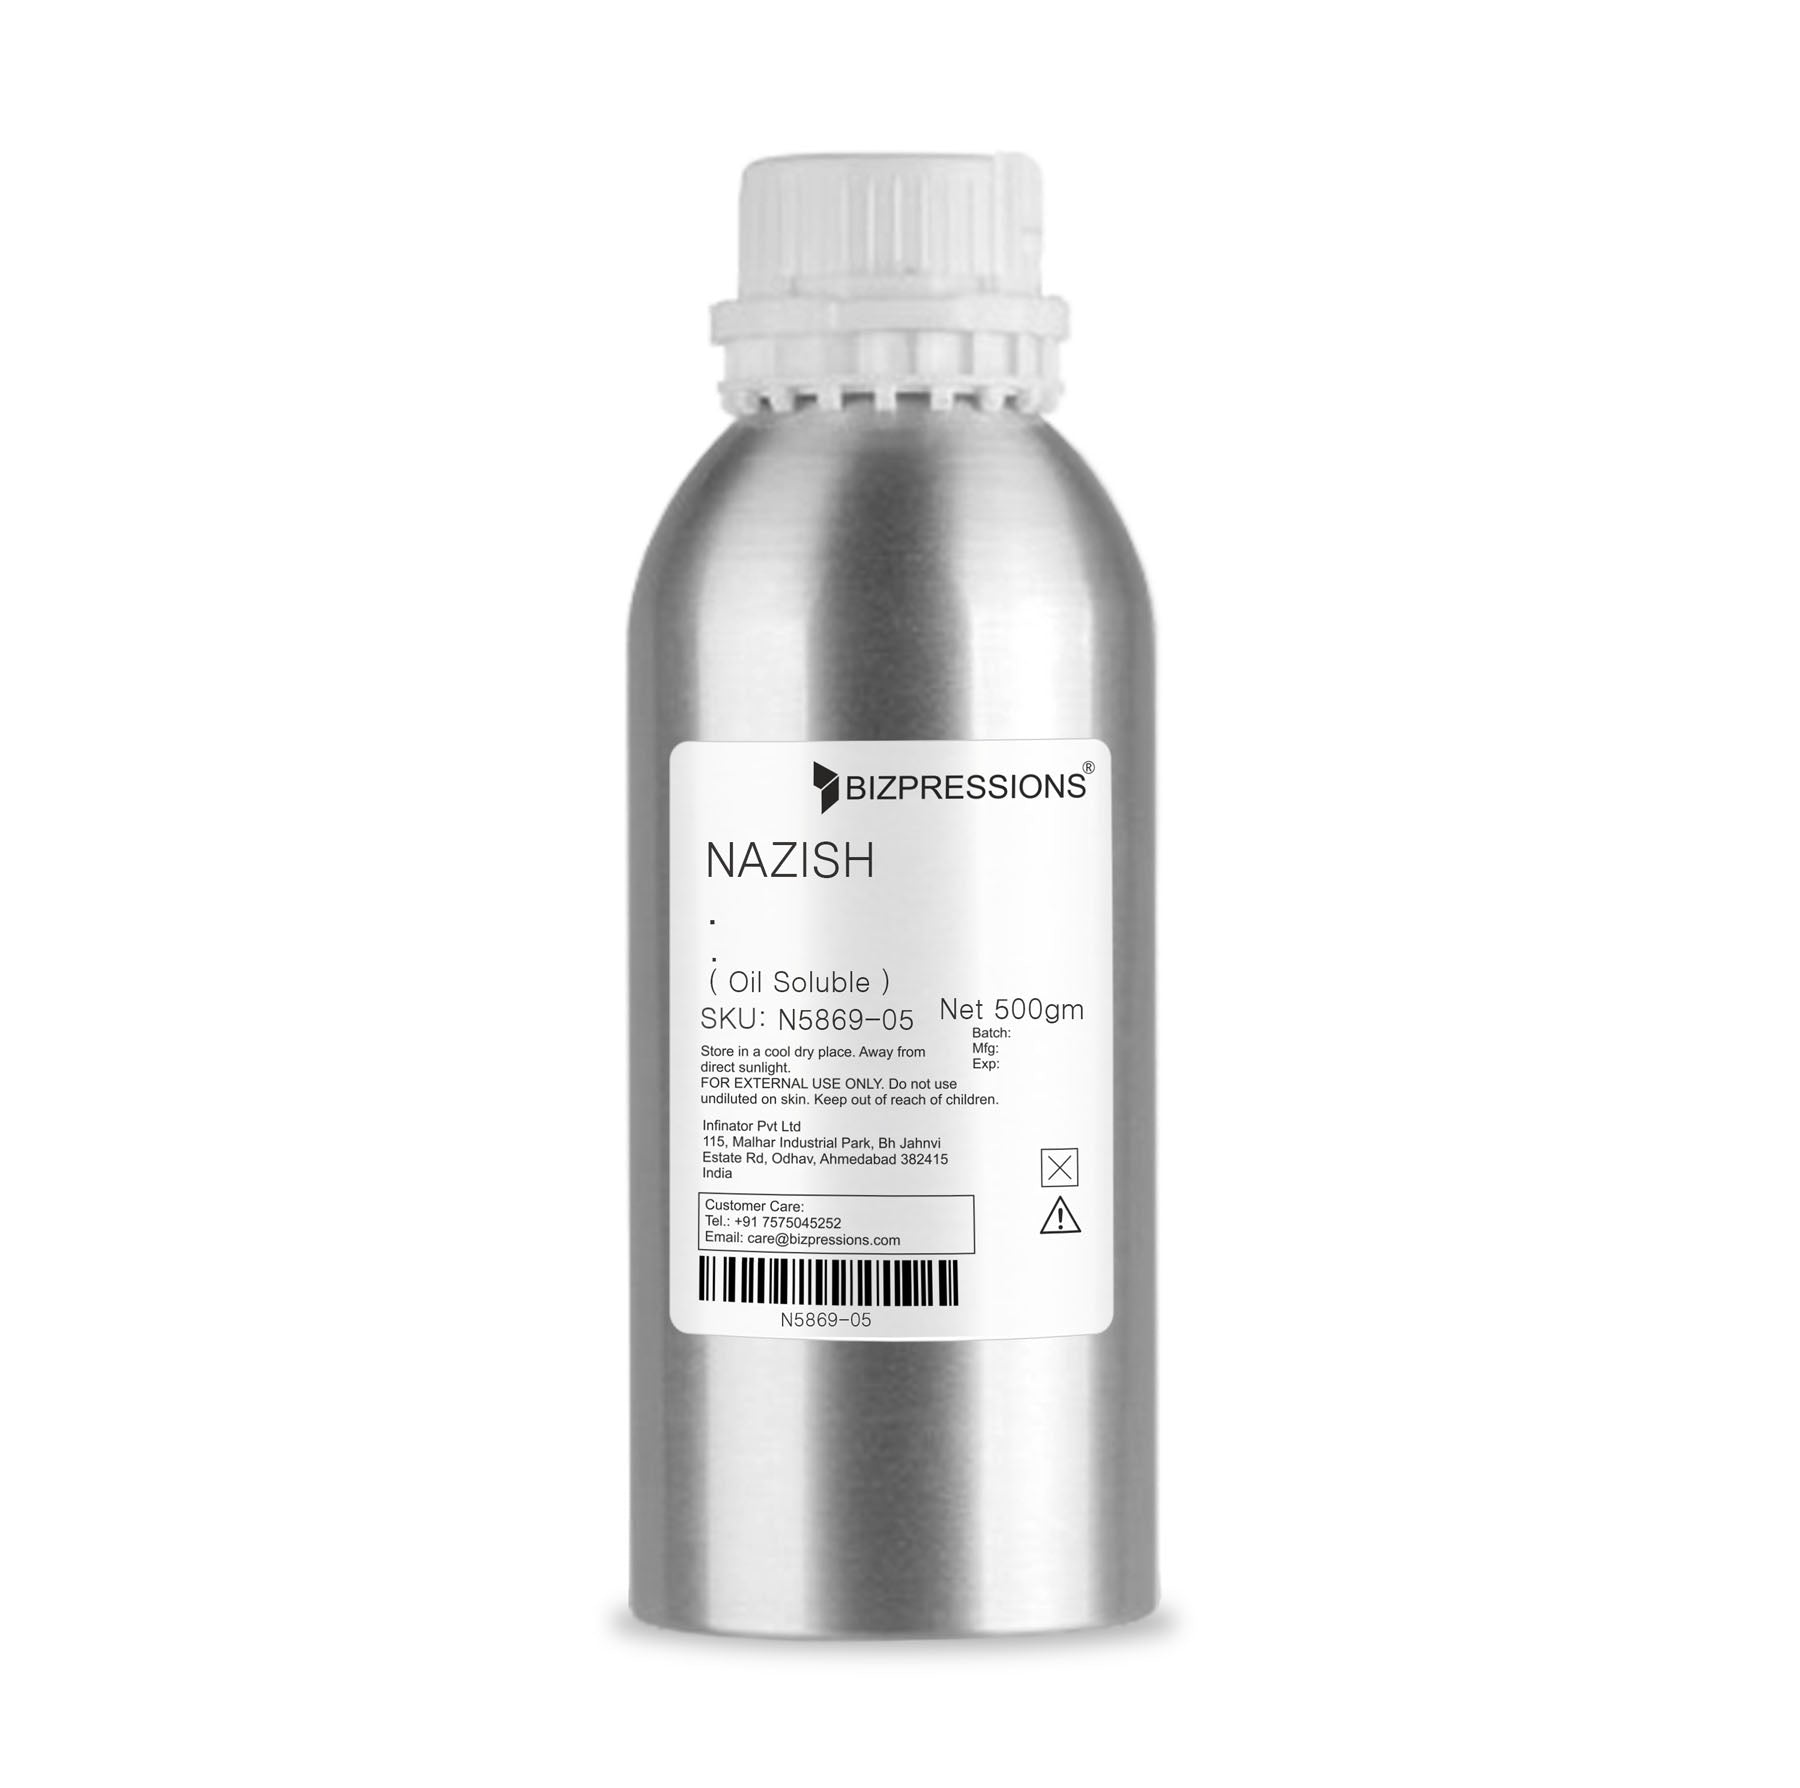 NAZISH - Fragrance ( Oil Soluble ) - 500 gm